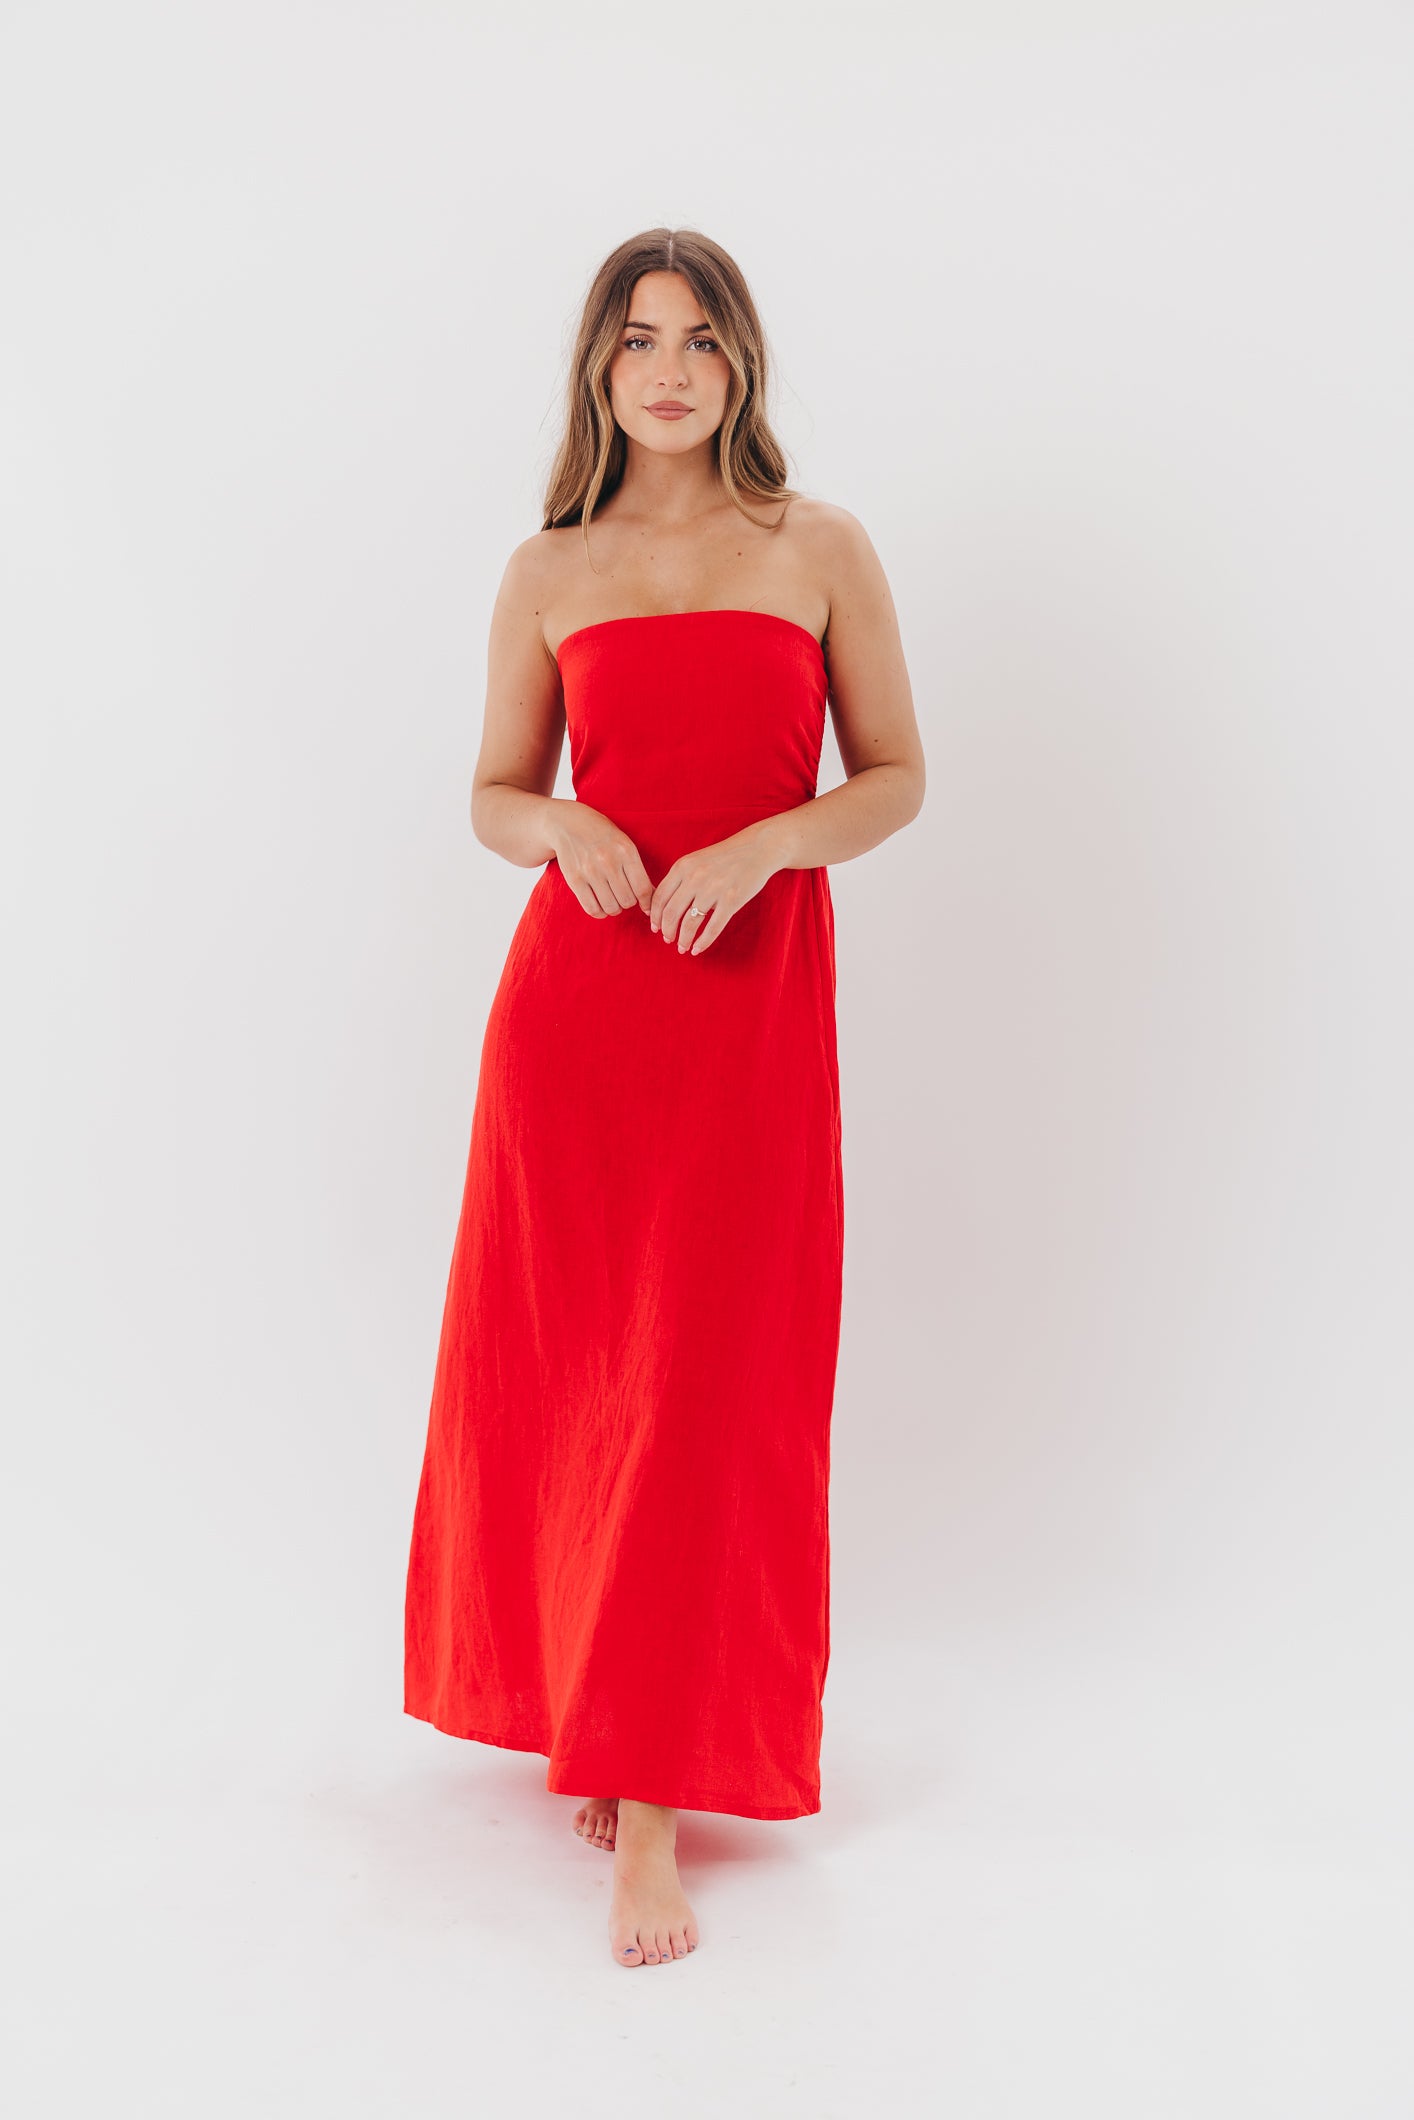 Blair Linen Maxi Dress in Red